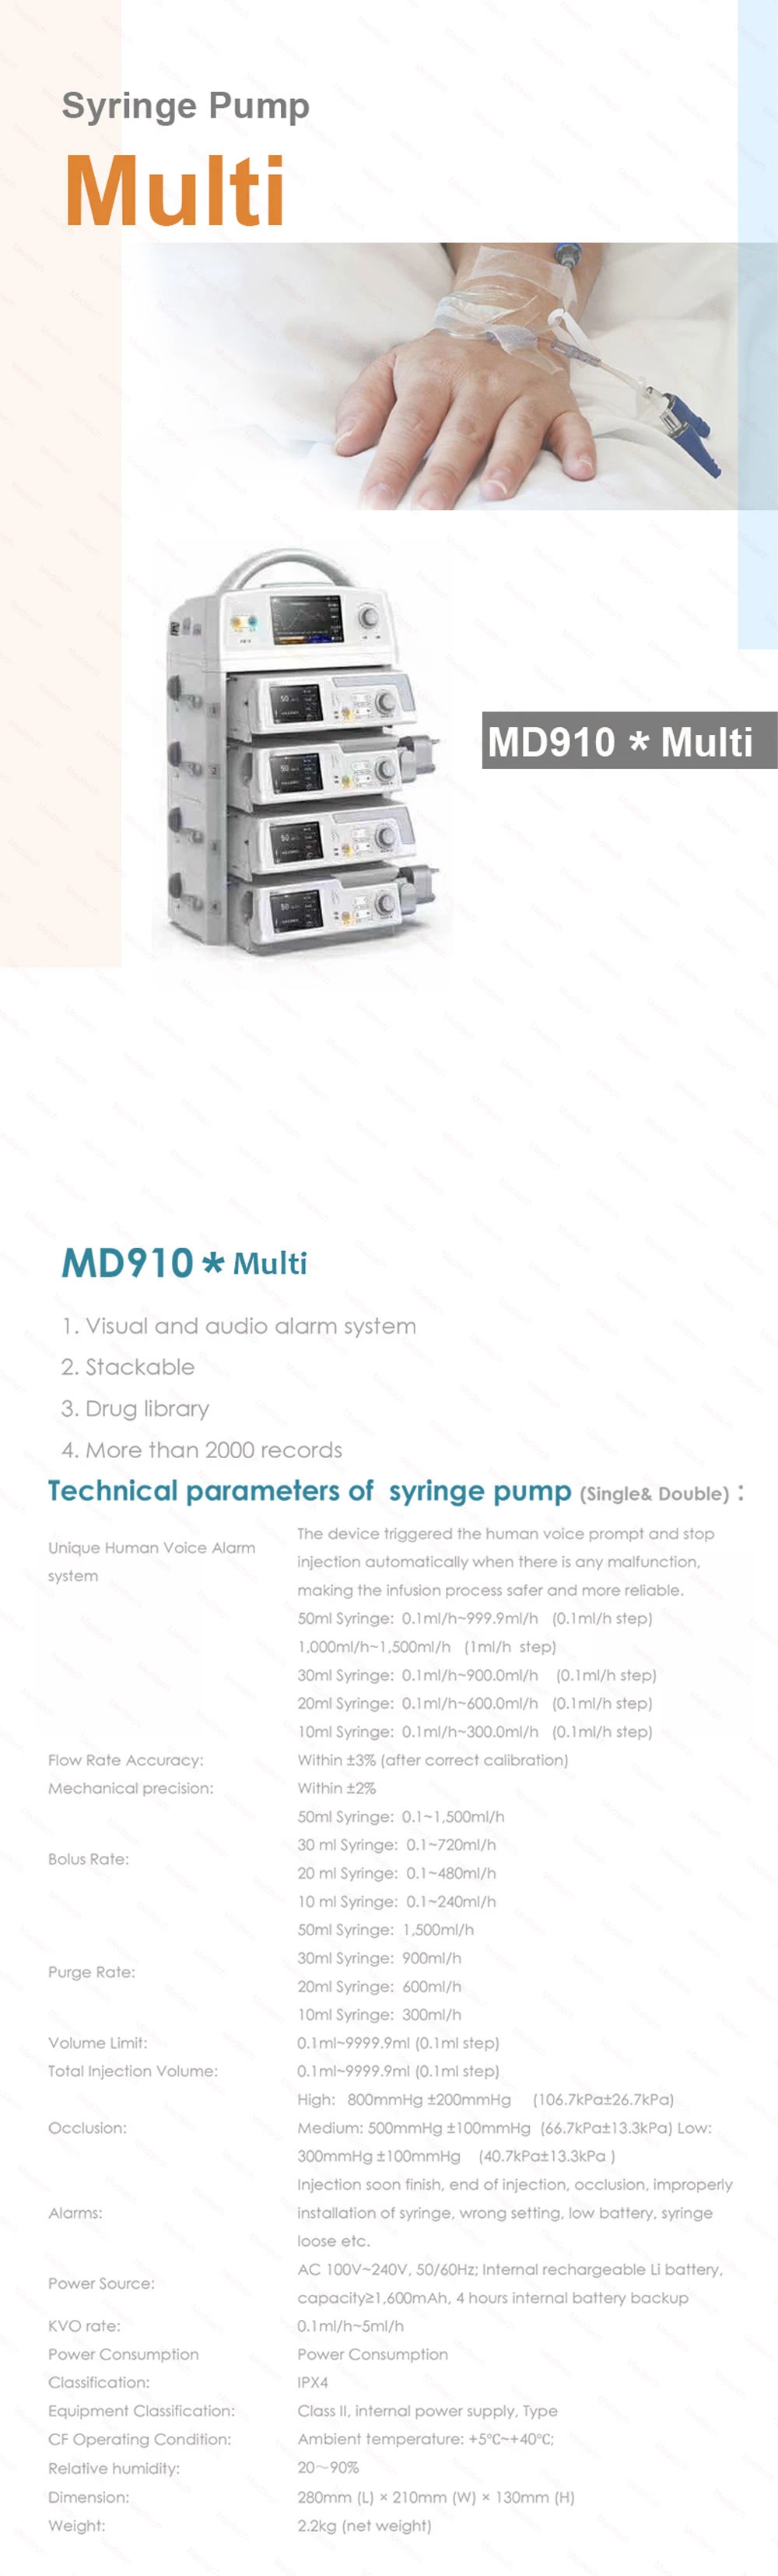 Meditech MD910 Syringe Pump with LCD Display (syringe pump)